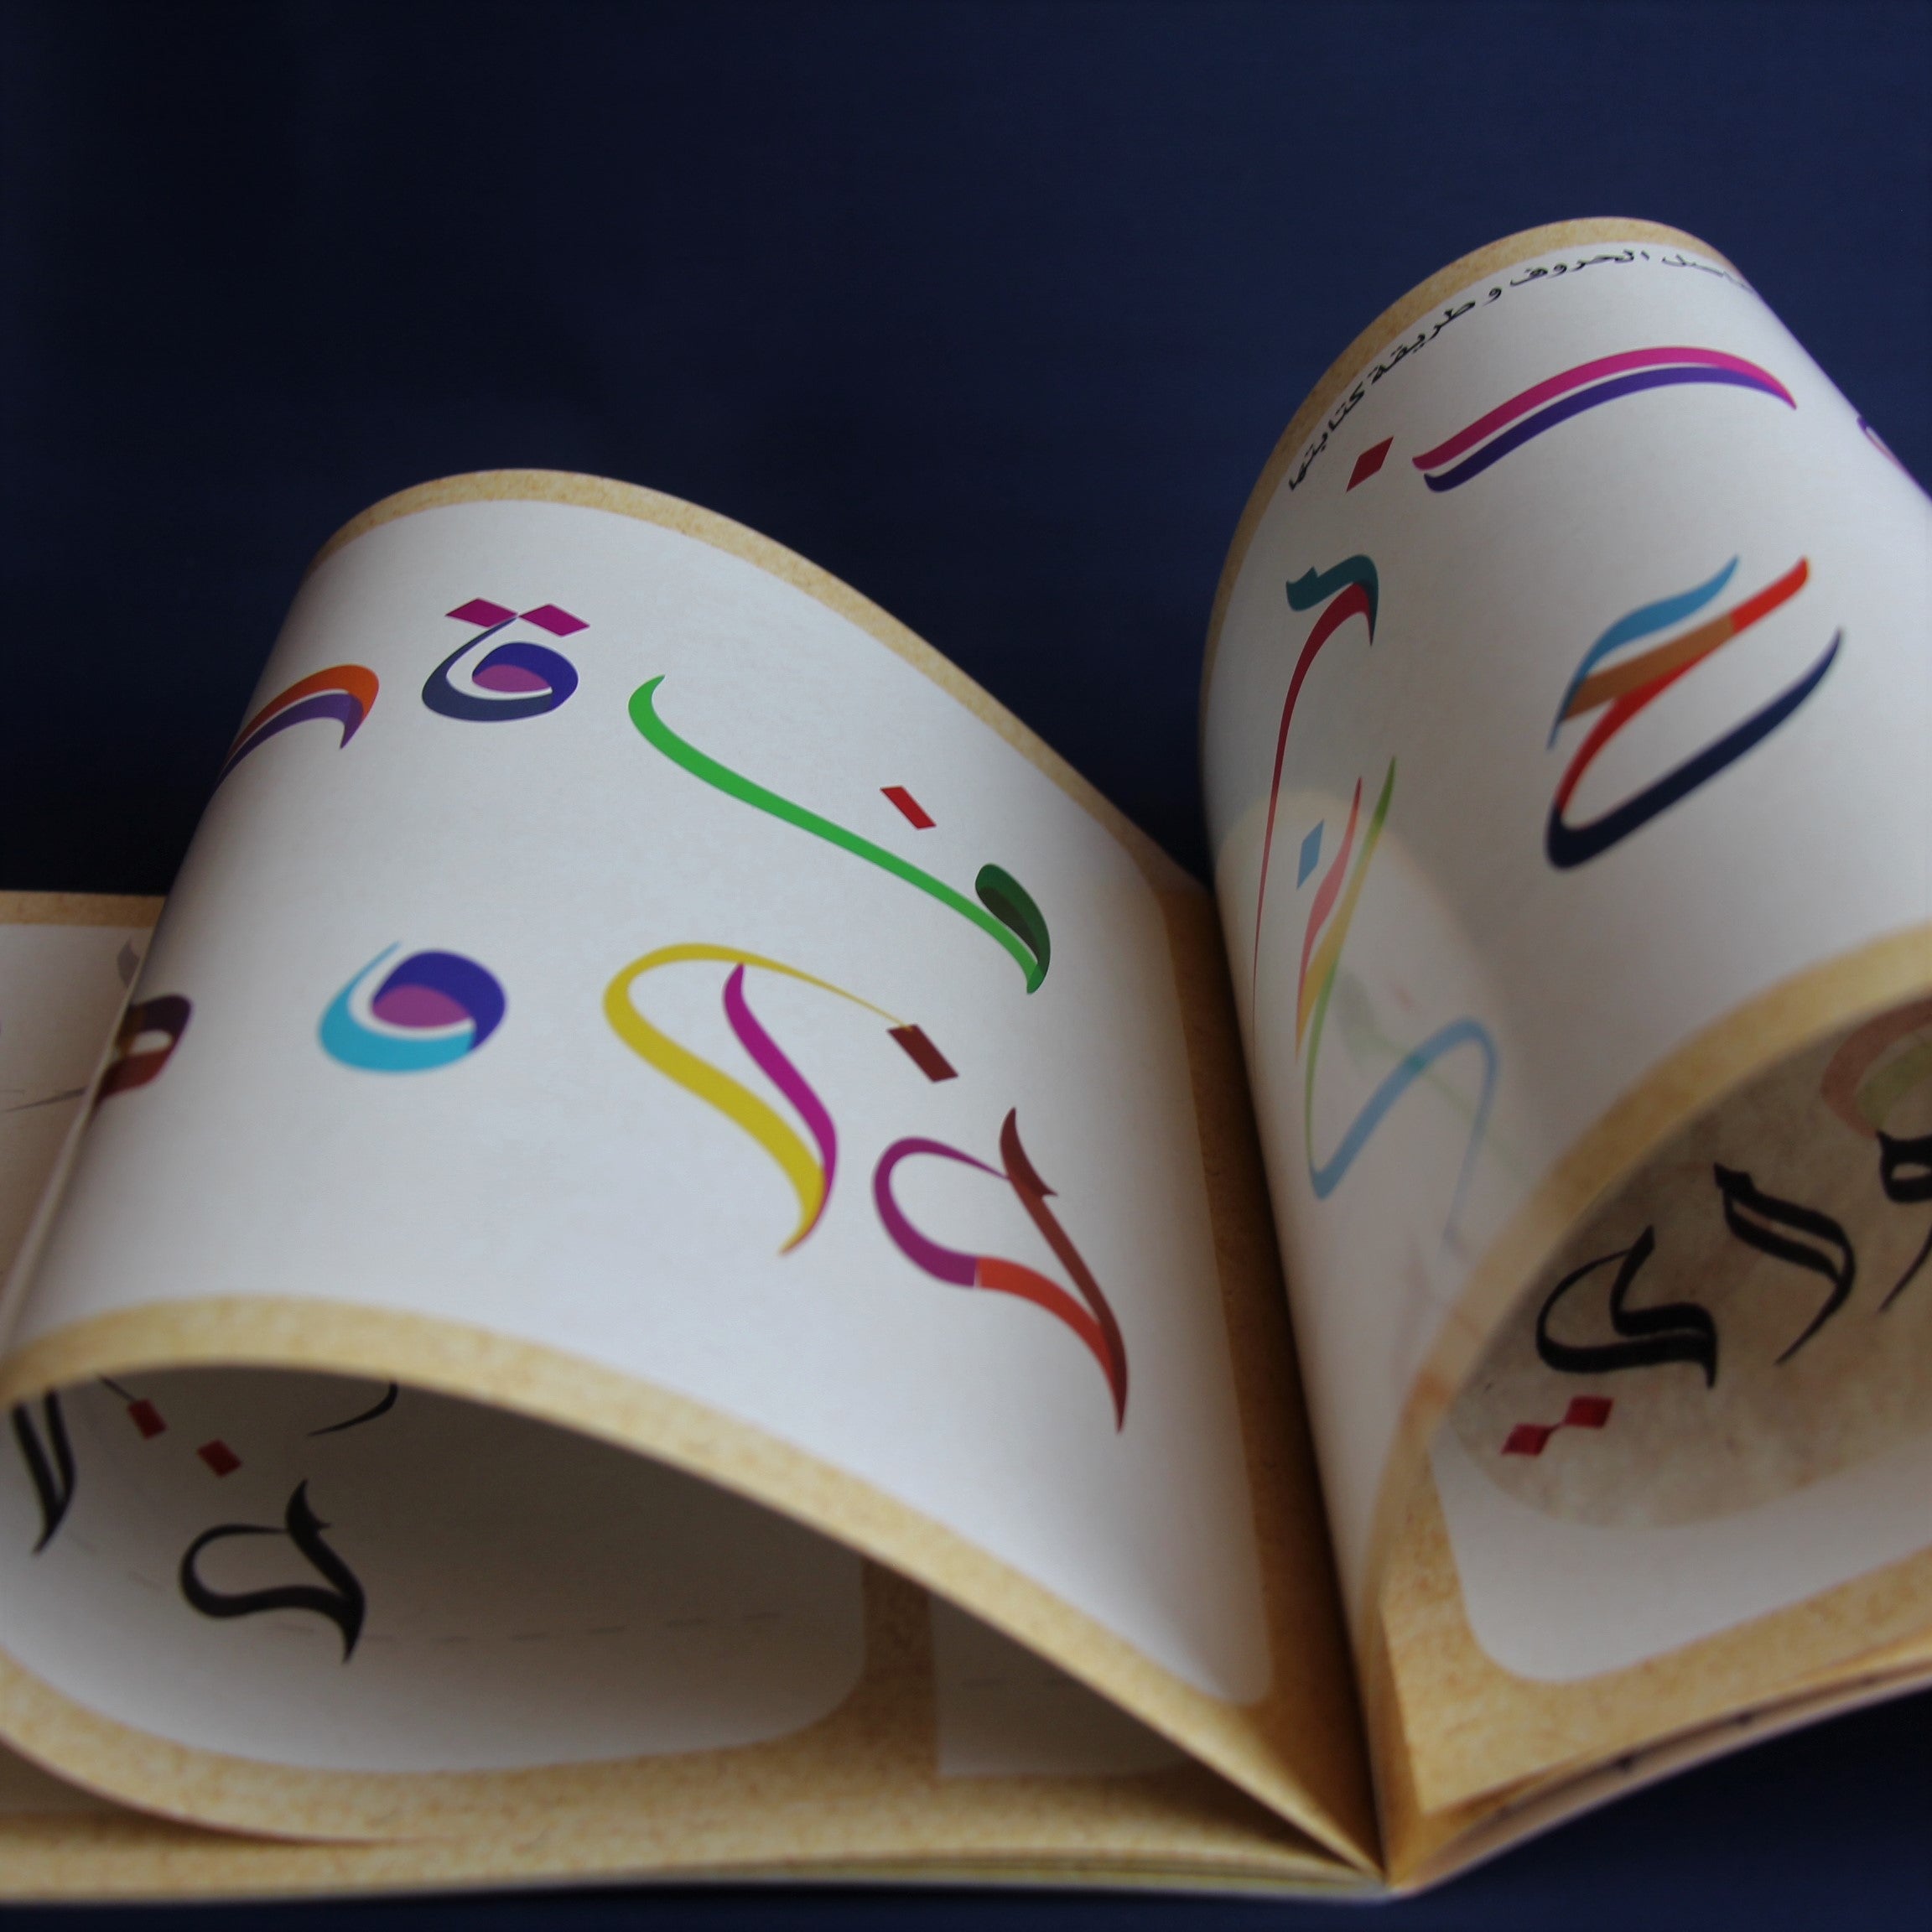 Arabic calligraphy workbook for Sunbuli script